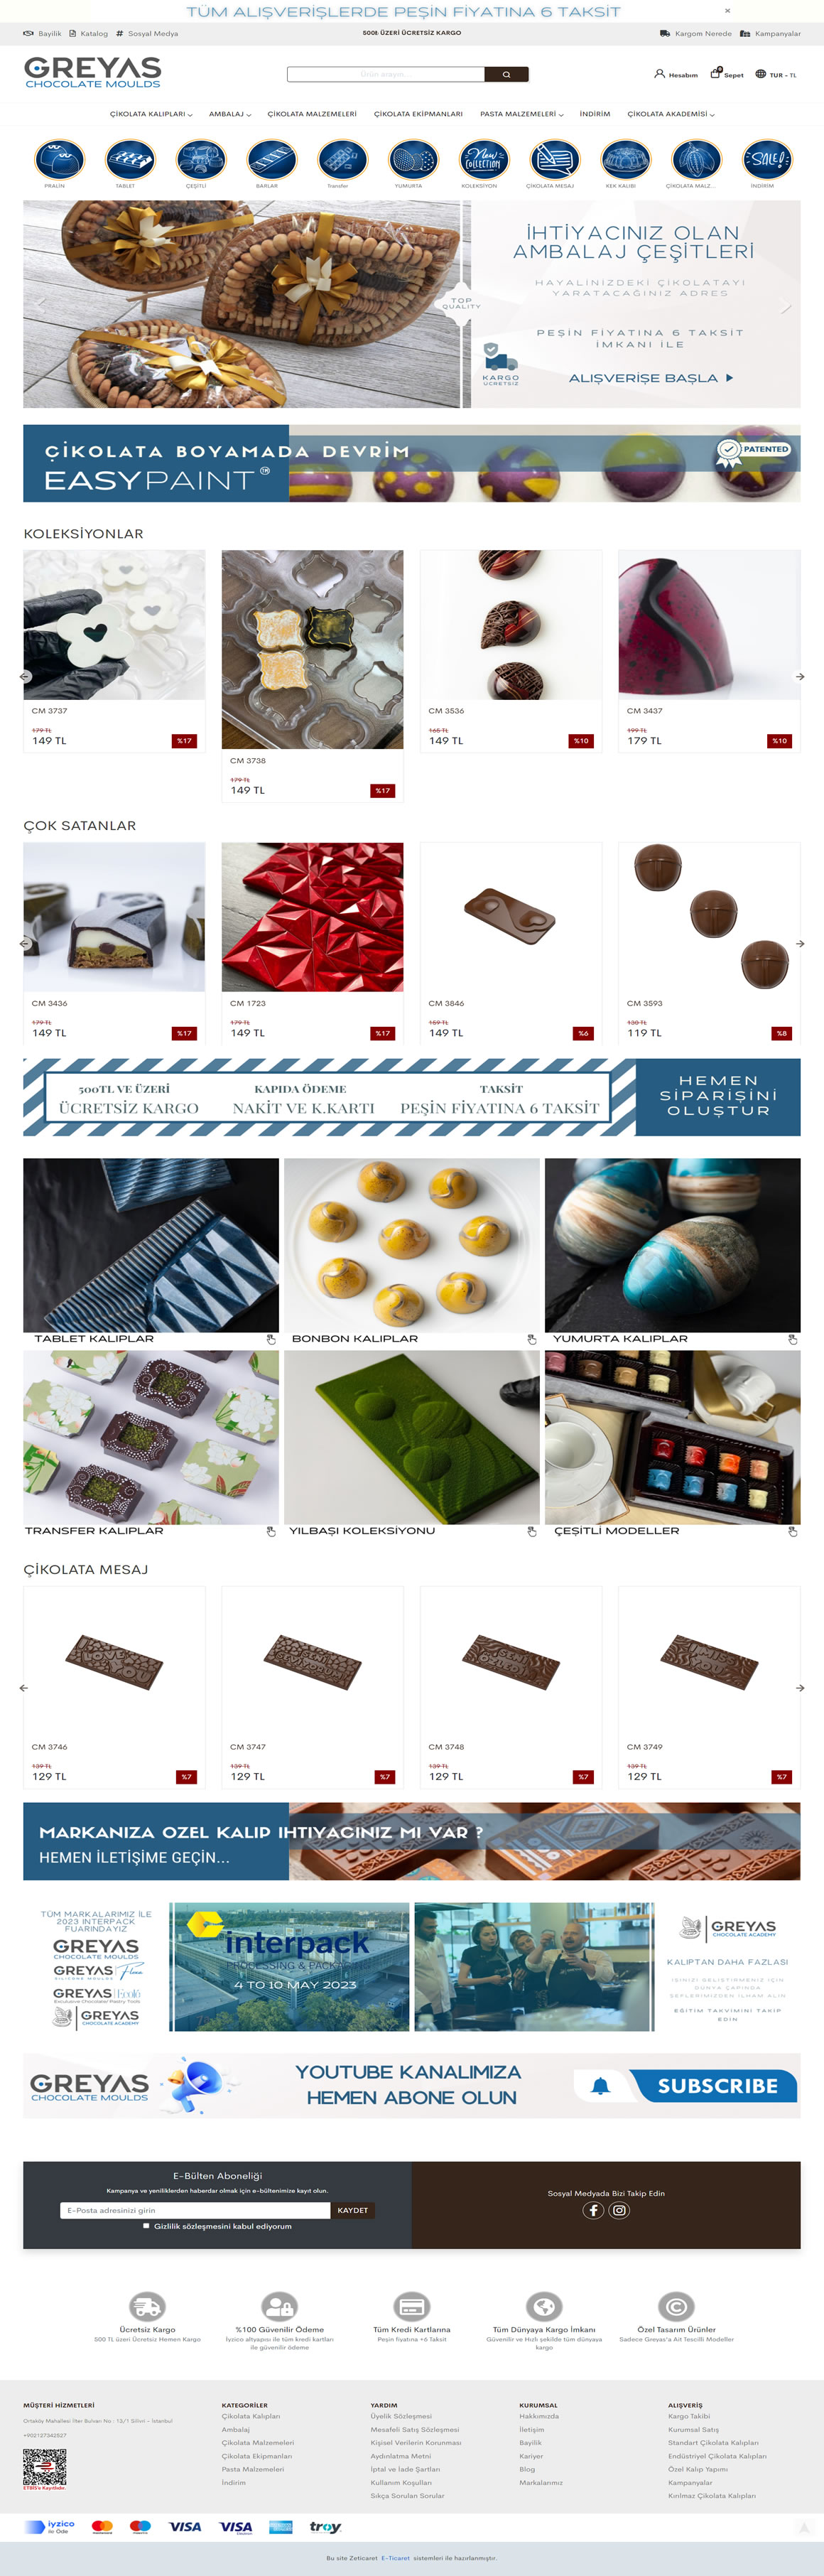 Greyas Chocolate Moulds e-ticaret e-ihracat yazılımı istanbul